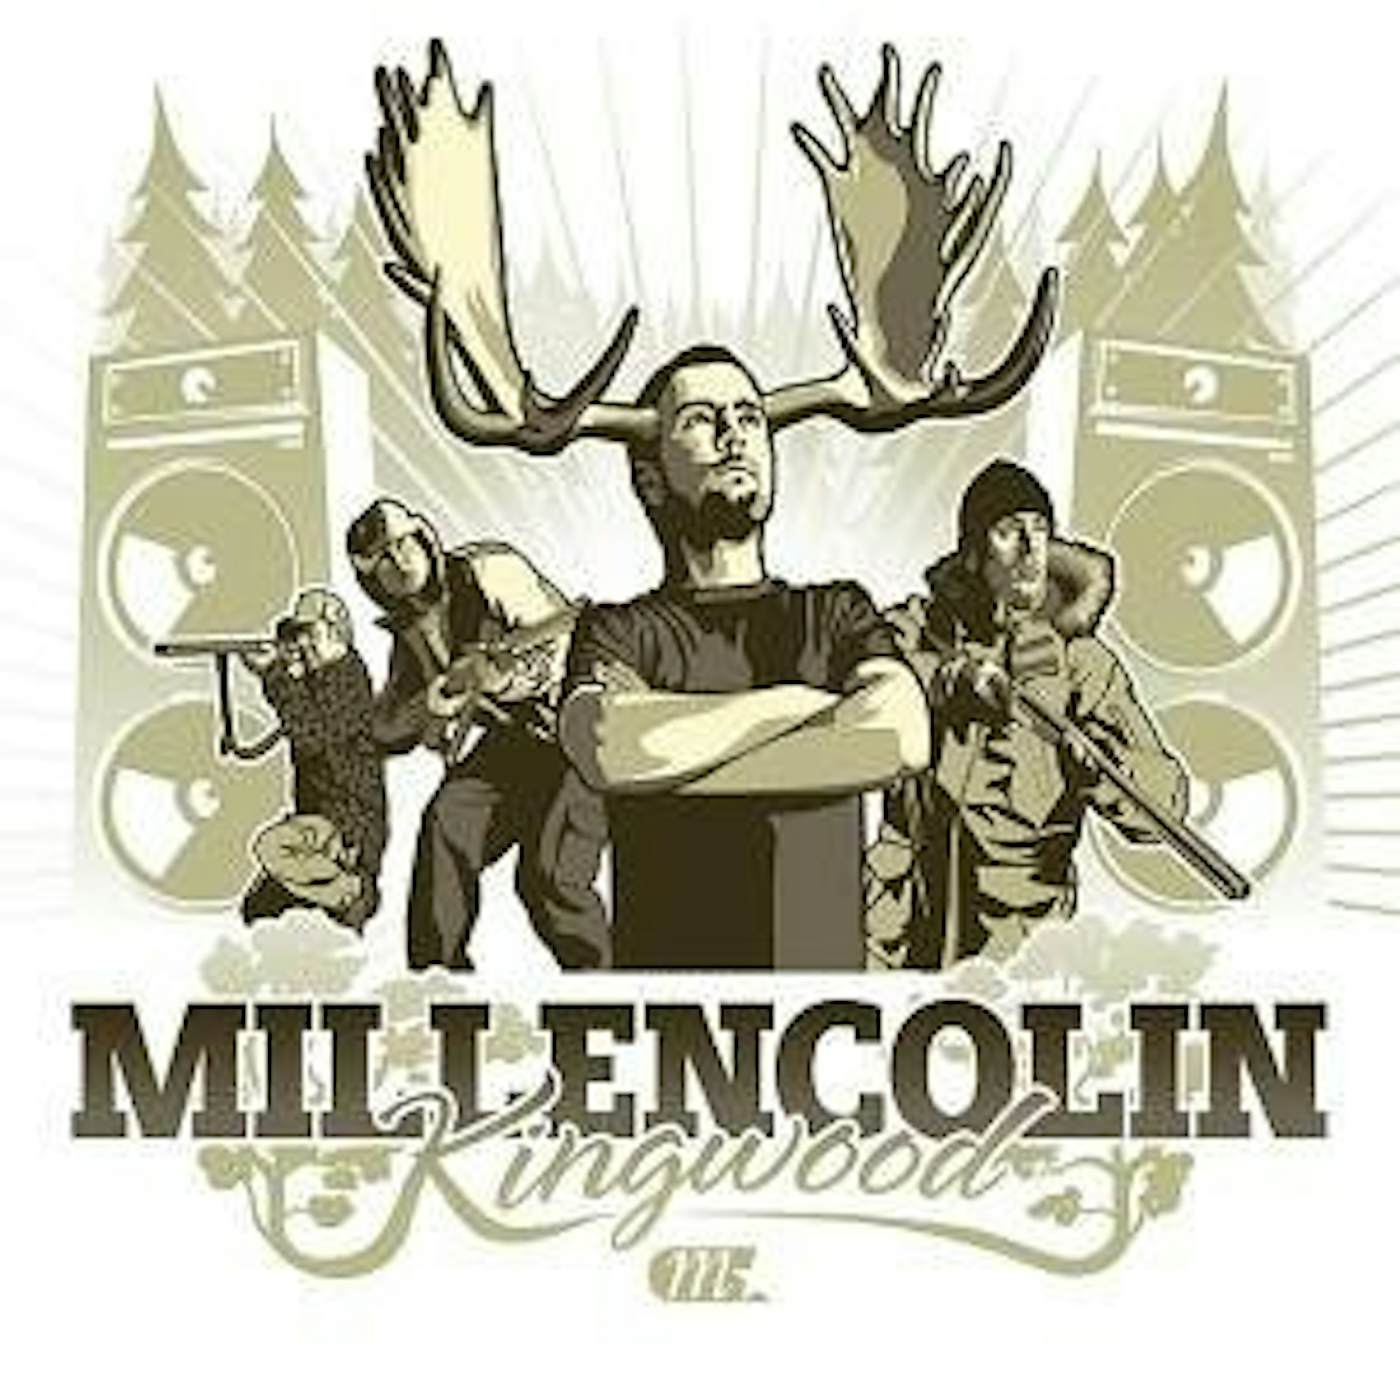 Millencolin KINGWOOD CD